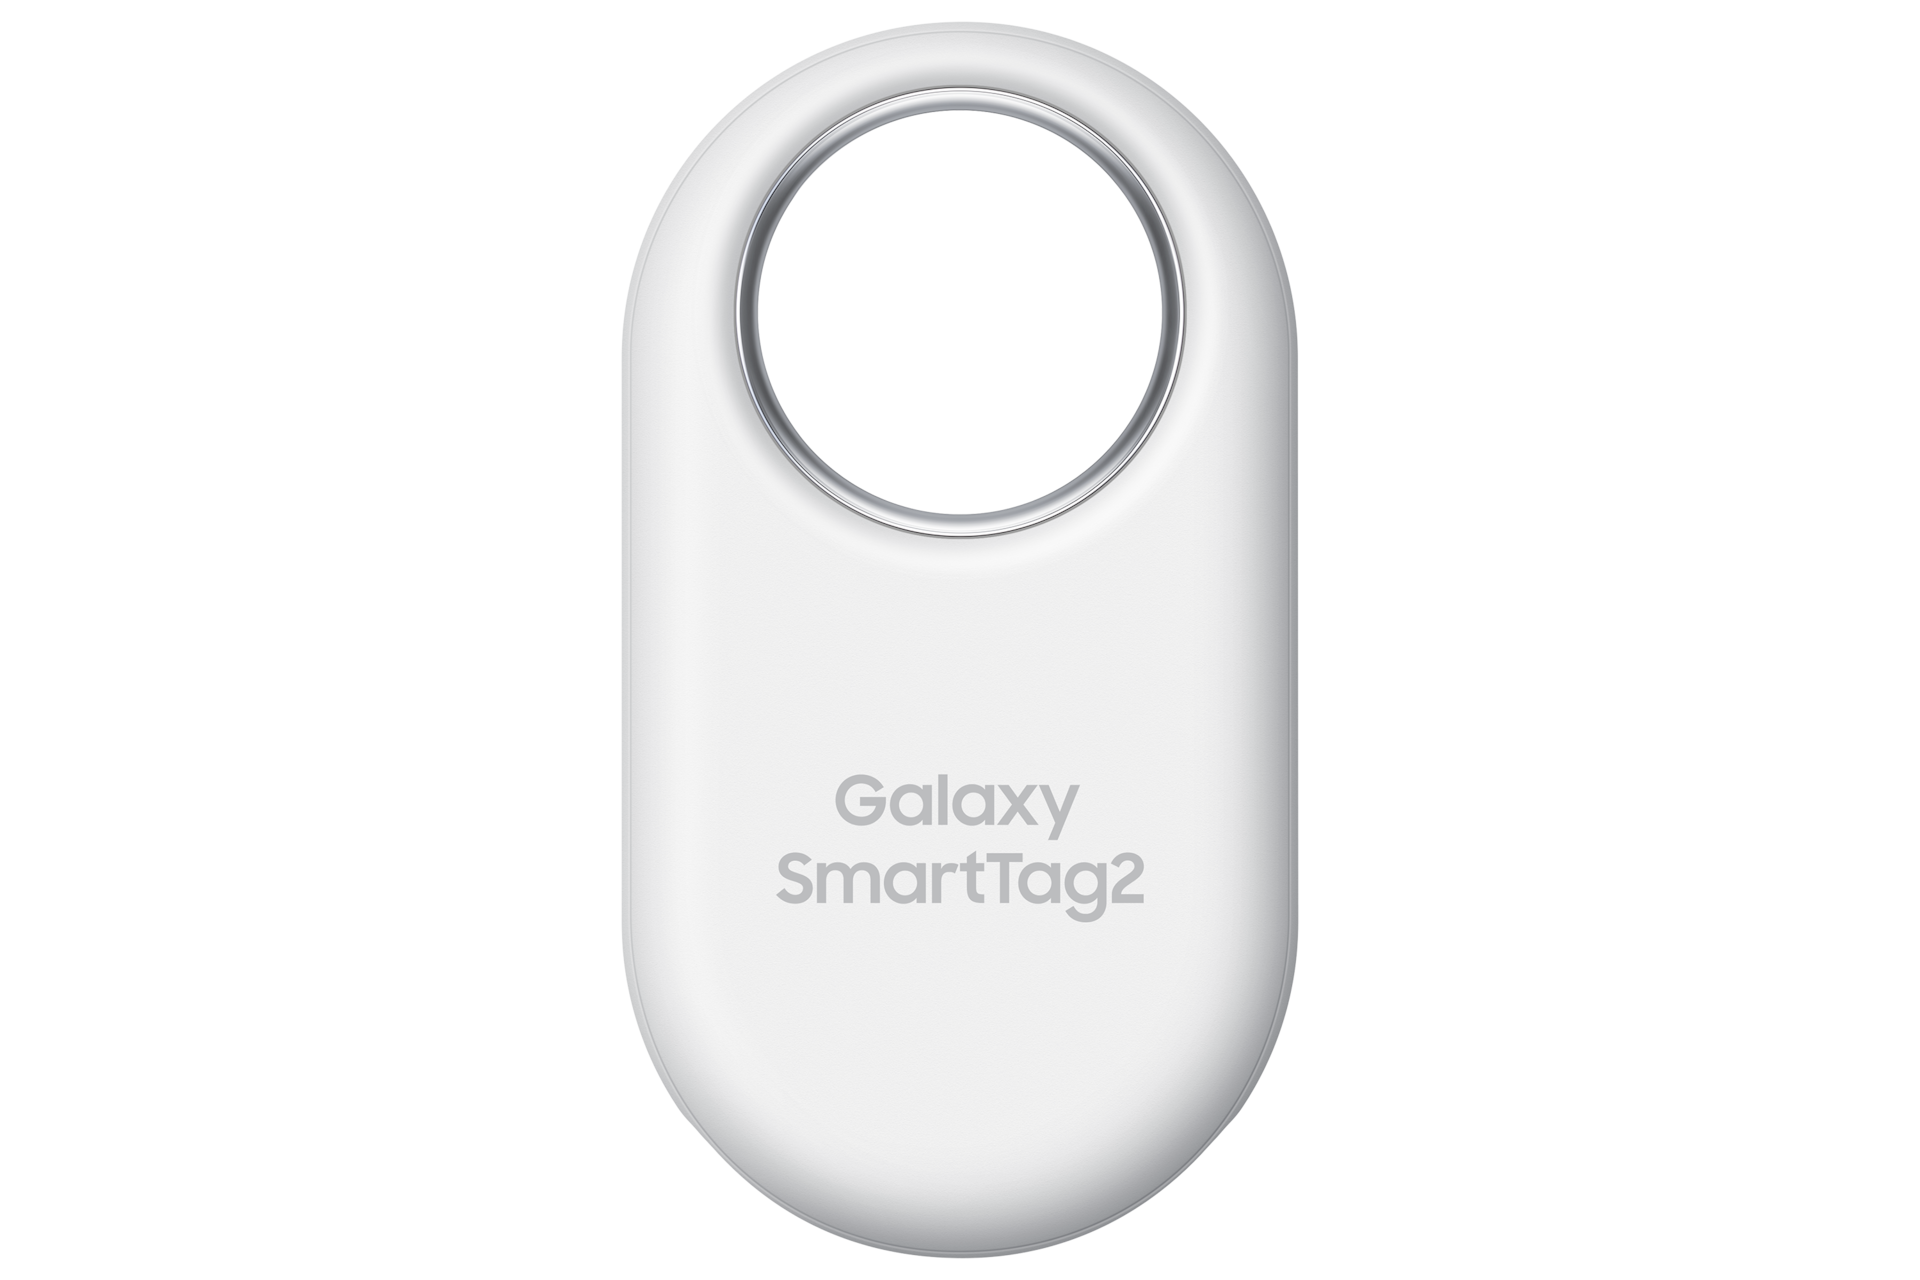 Samsung Galaxy SmartTag2, White